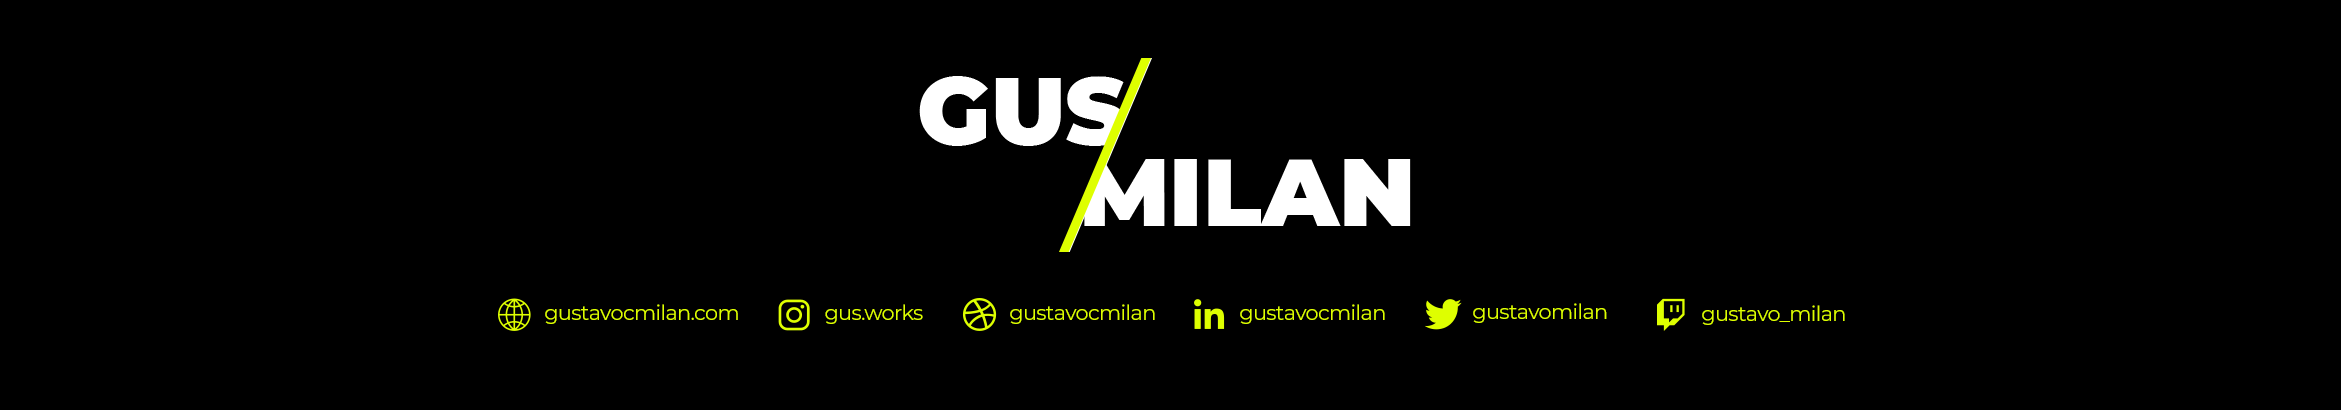 Banner de perfil de Gustavo da Costa Milan